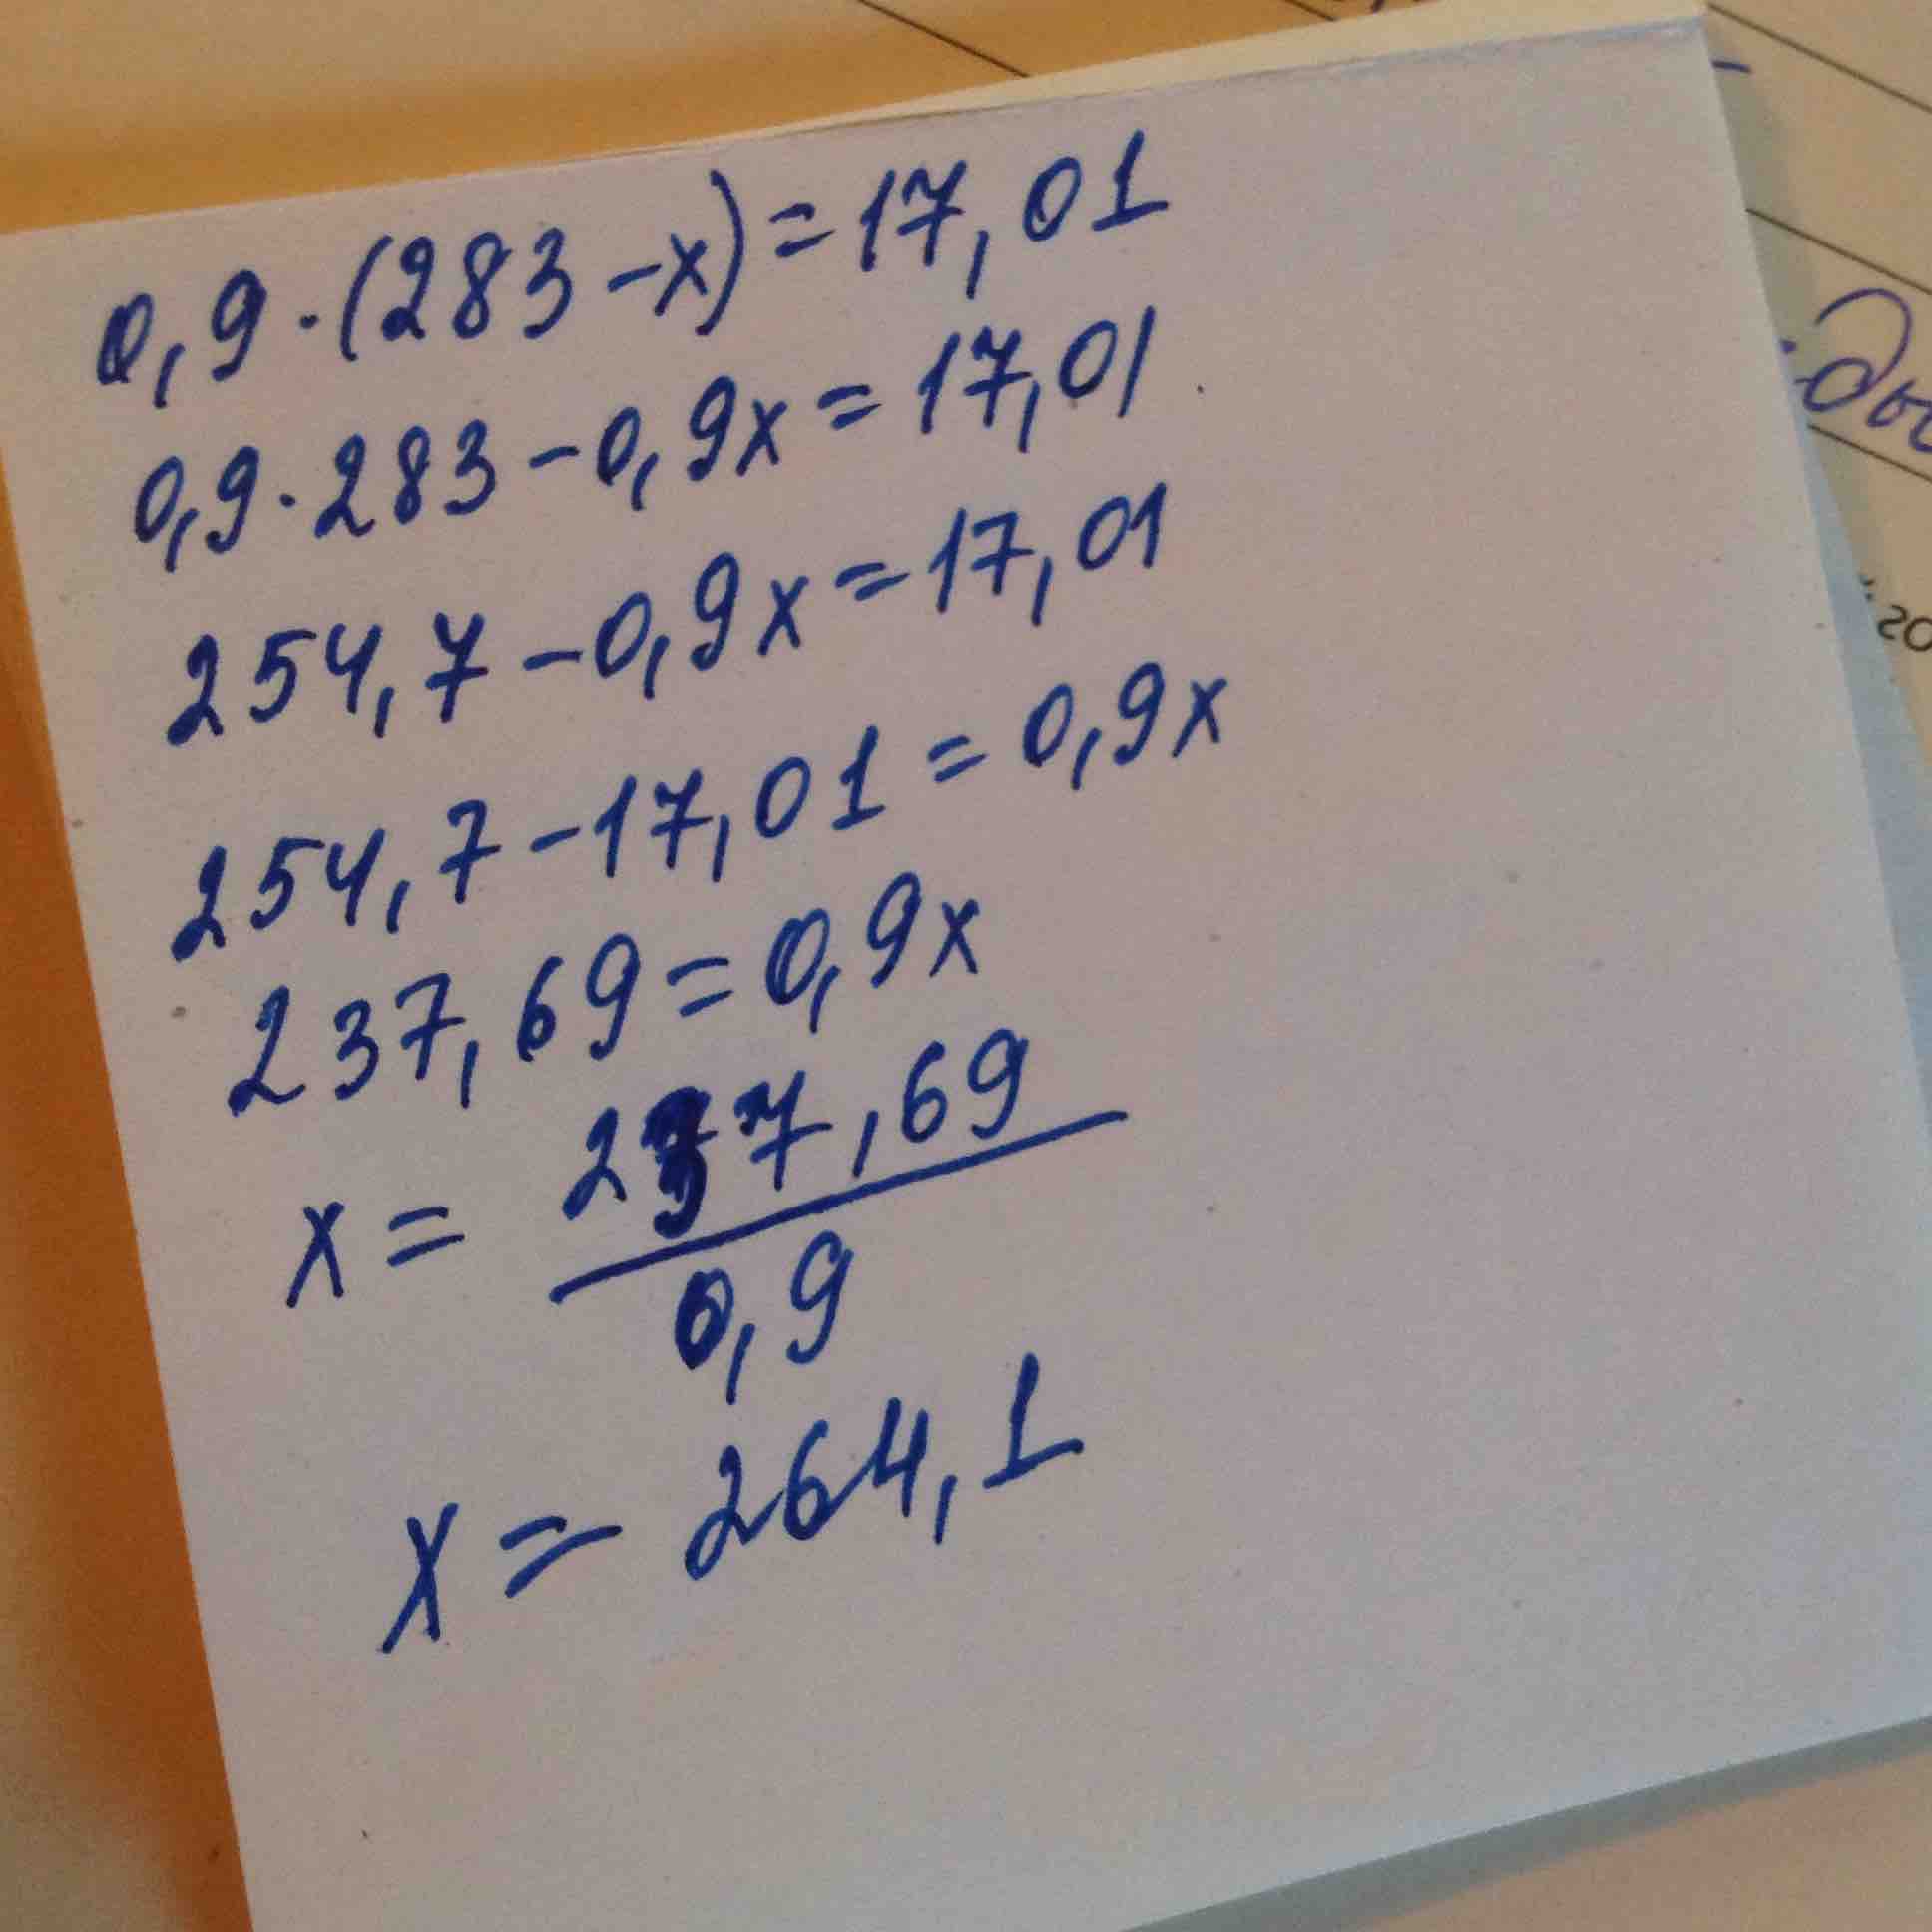 17 х 0 уравнение. 0,9(283-Х)=17,01. 0 9 283-X 17 01. (1/17)Х-1=17х. Как решить 0,9(283-x)=17,01.